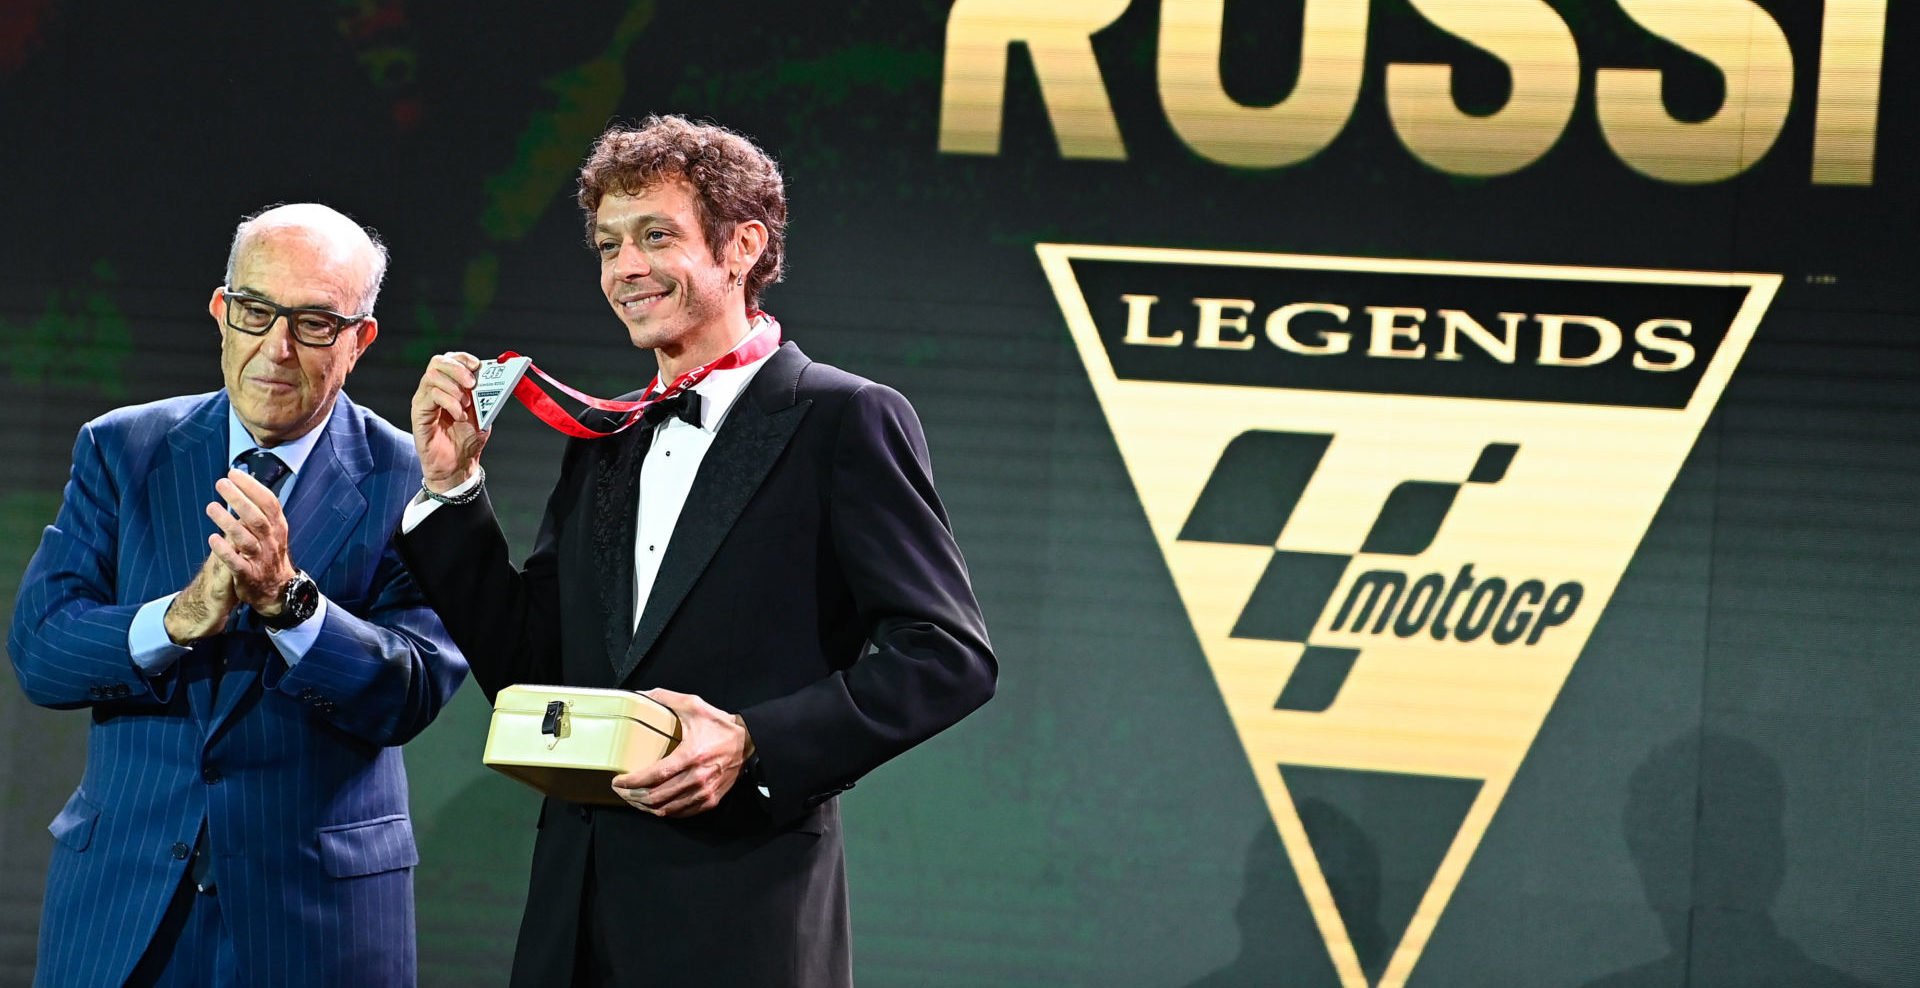 MotoGP: Rossi Named MotoGP Legend - Roadracing World Magazine | Motorcycle Riding, Racing amp; Tech News